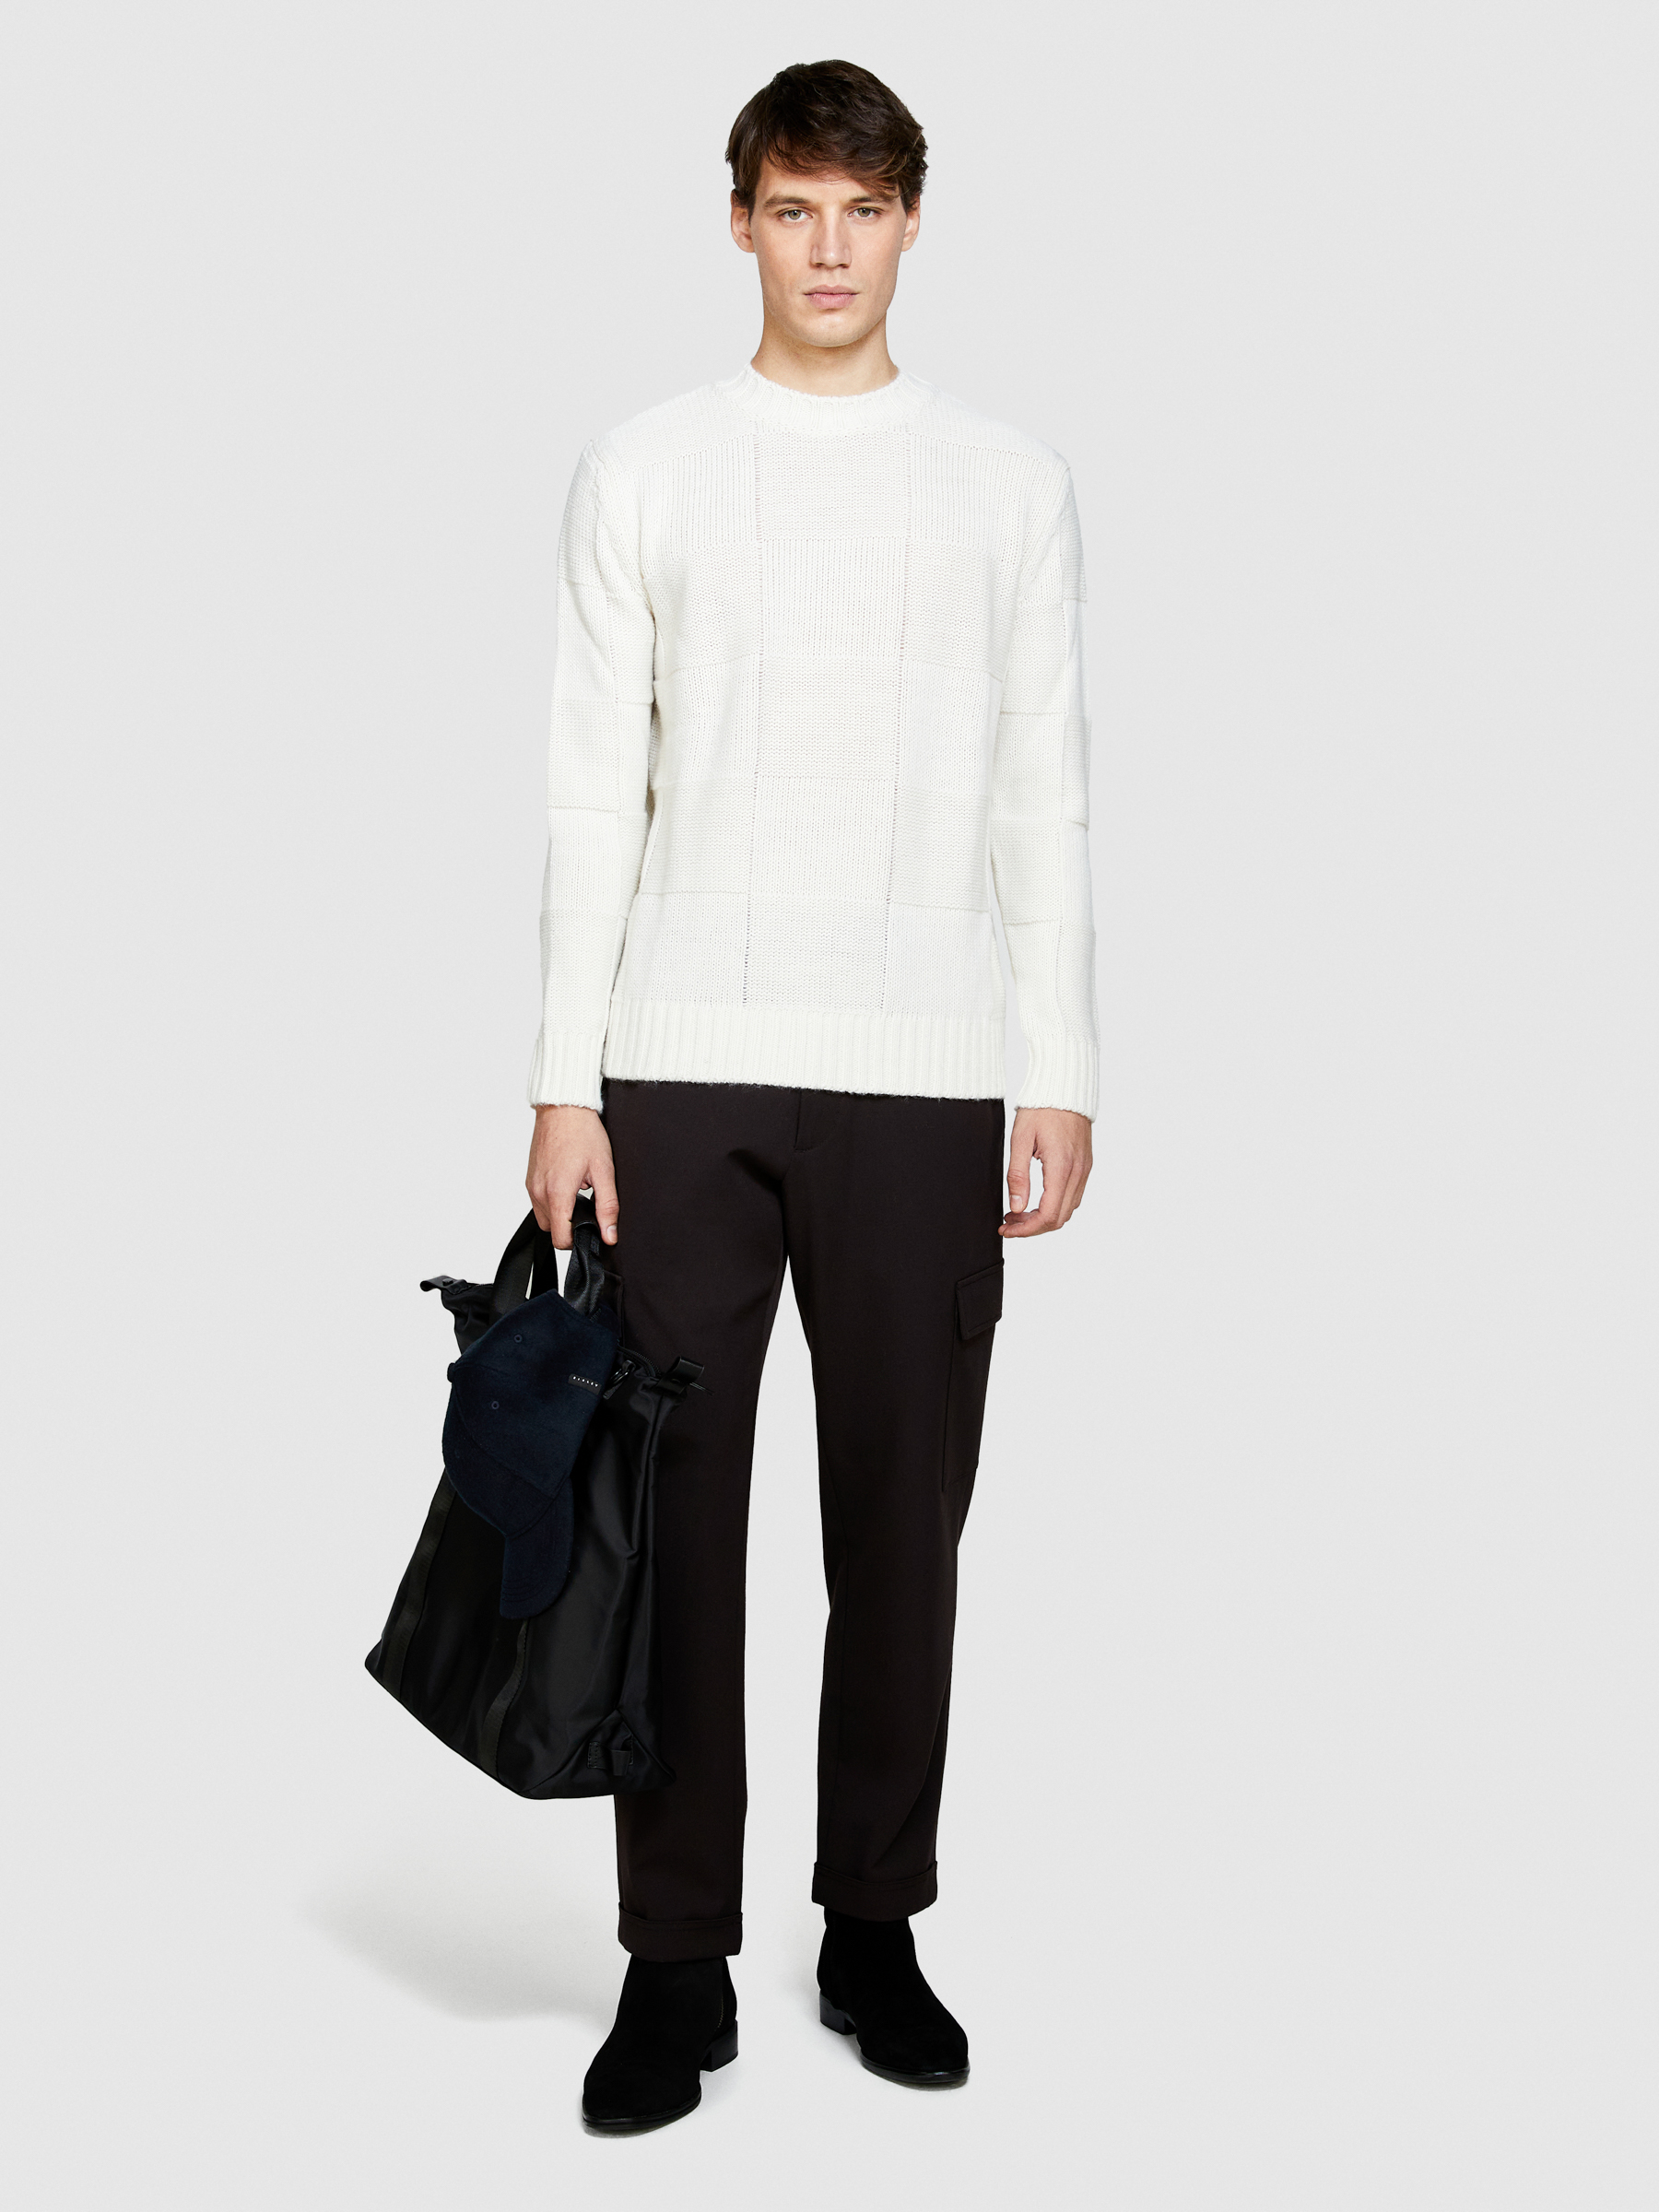 Sisley - Knit Sweater With Check, Man, White, Size: XL